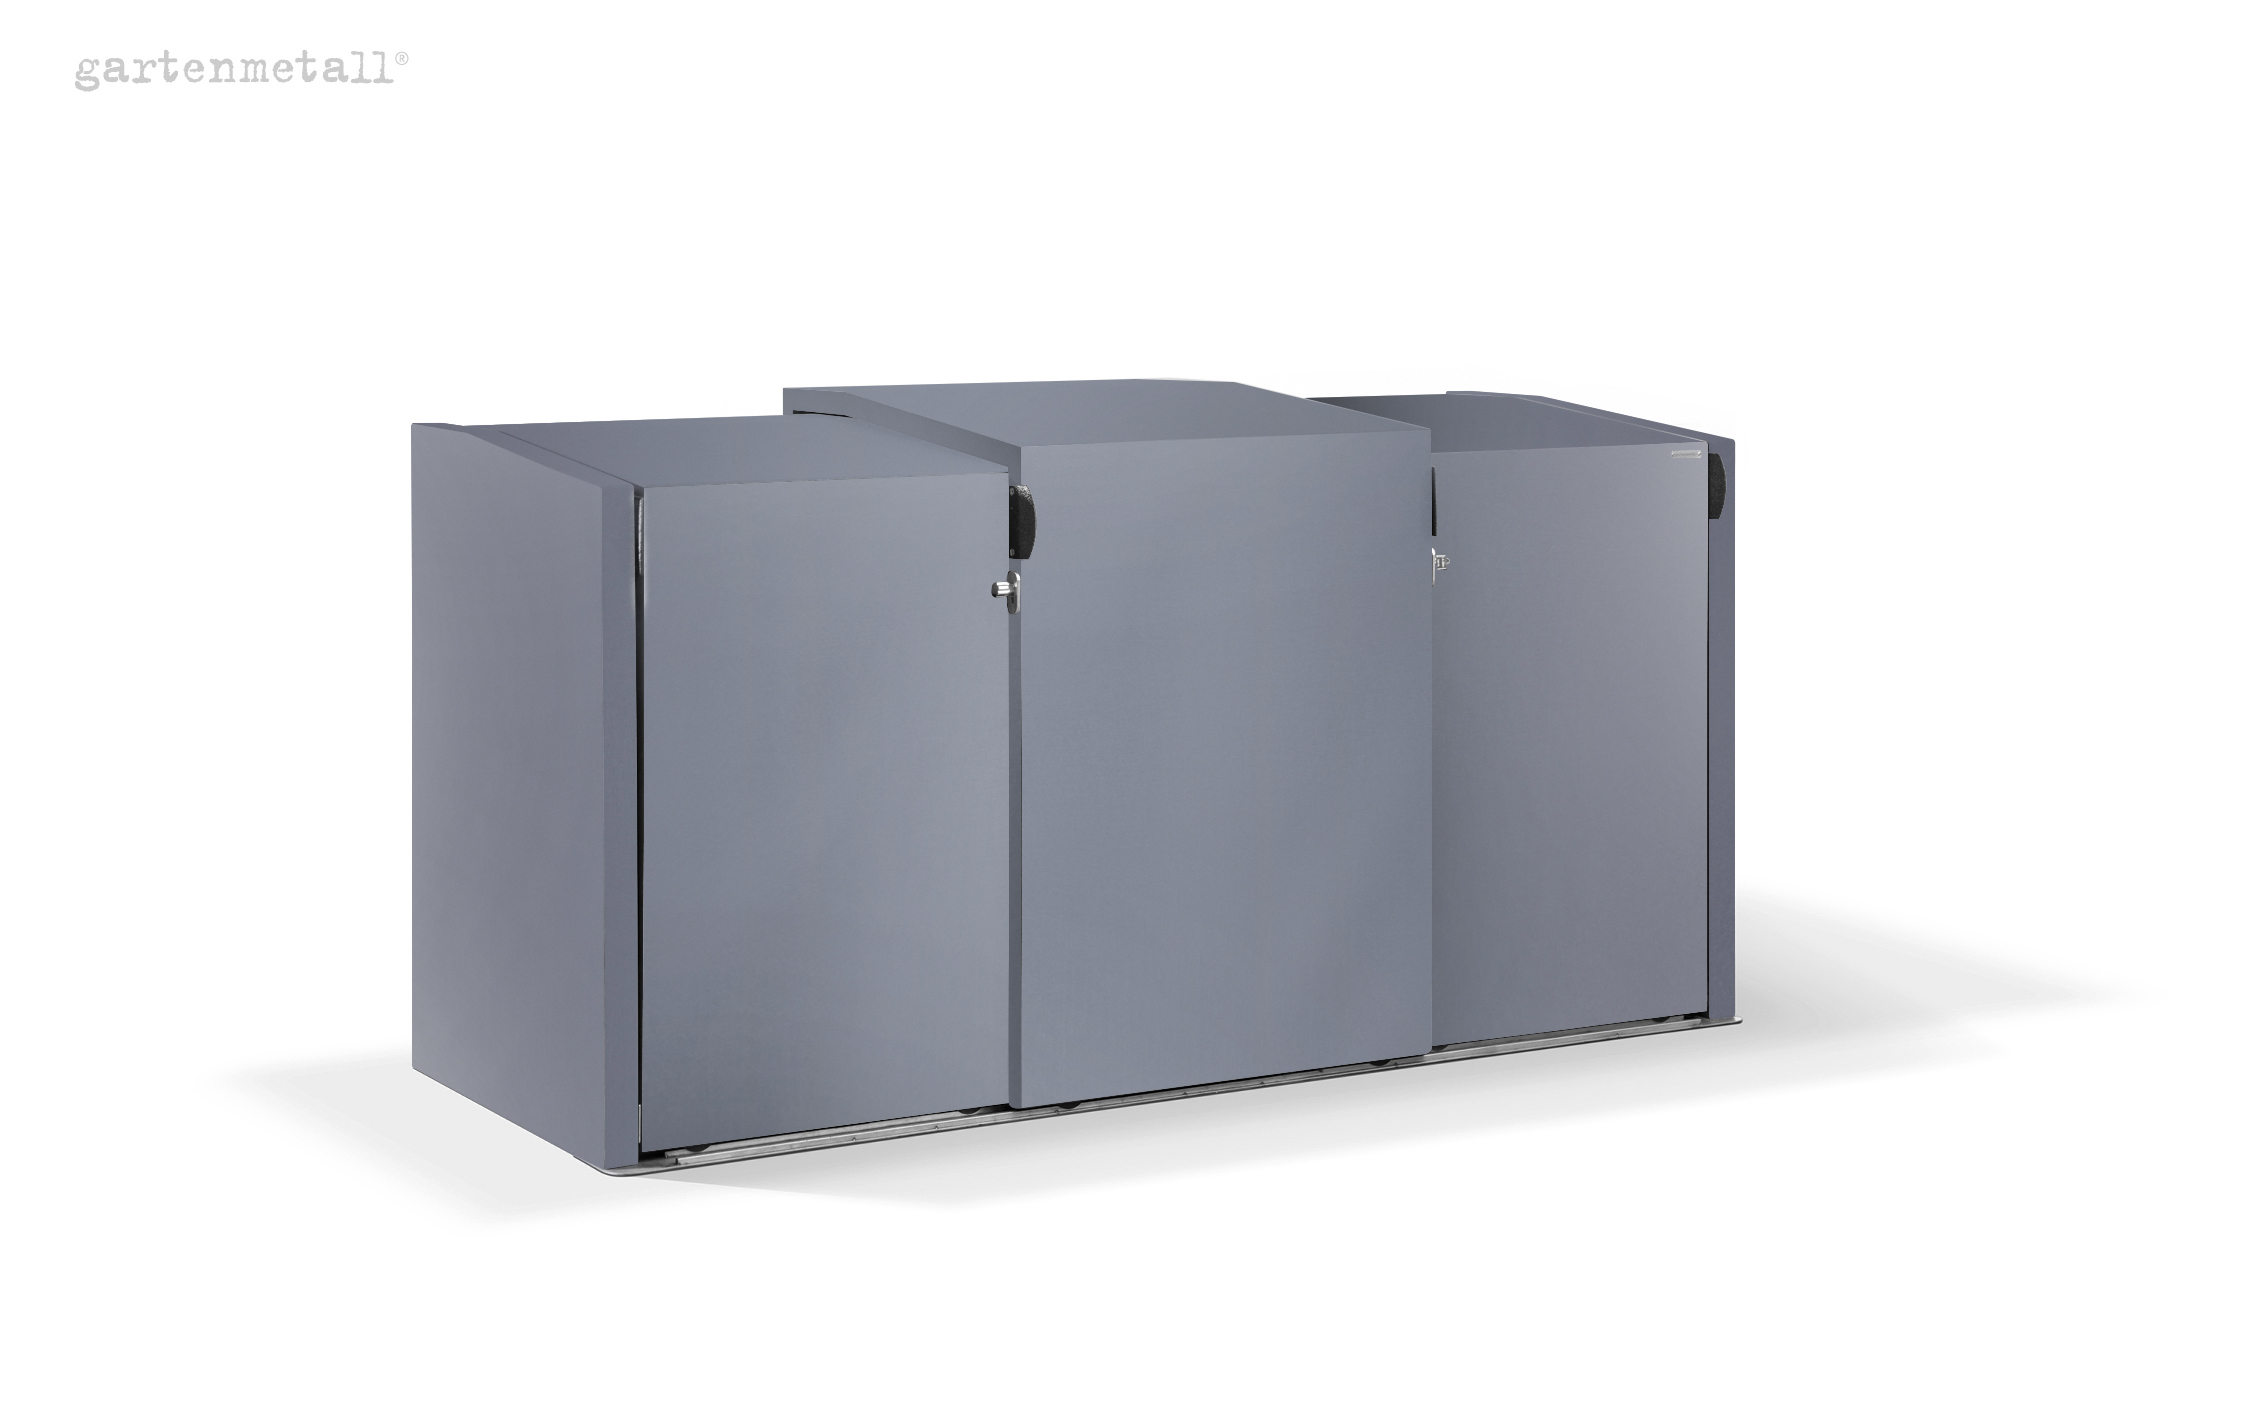 XANTEN bin box for 3 bins 240 l with 3 sliding doors